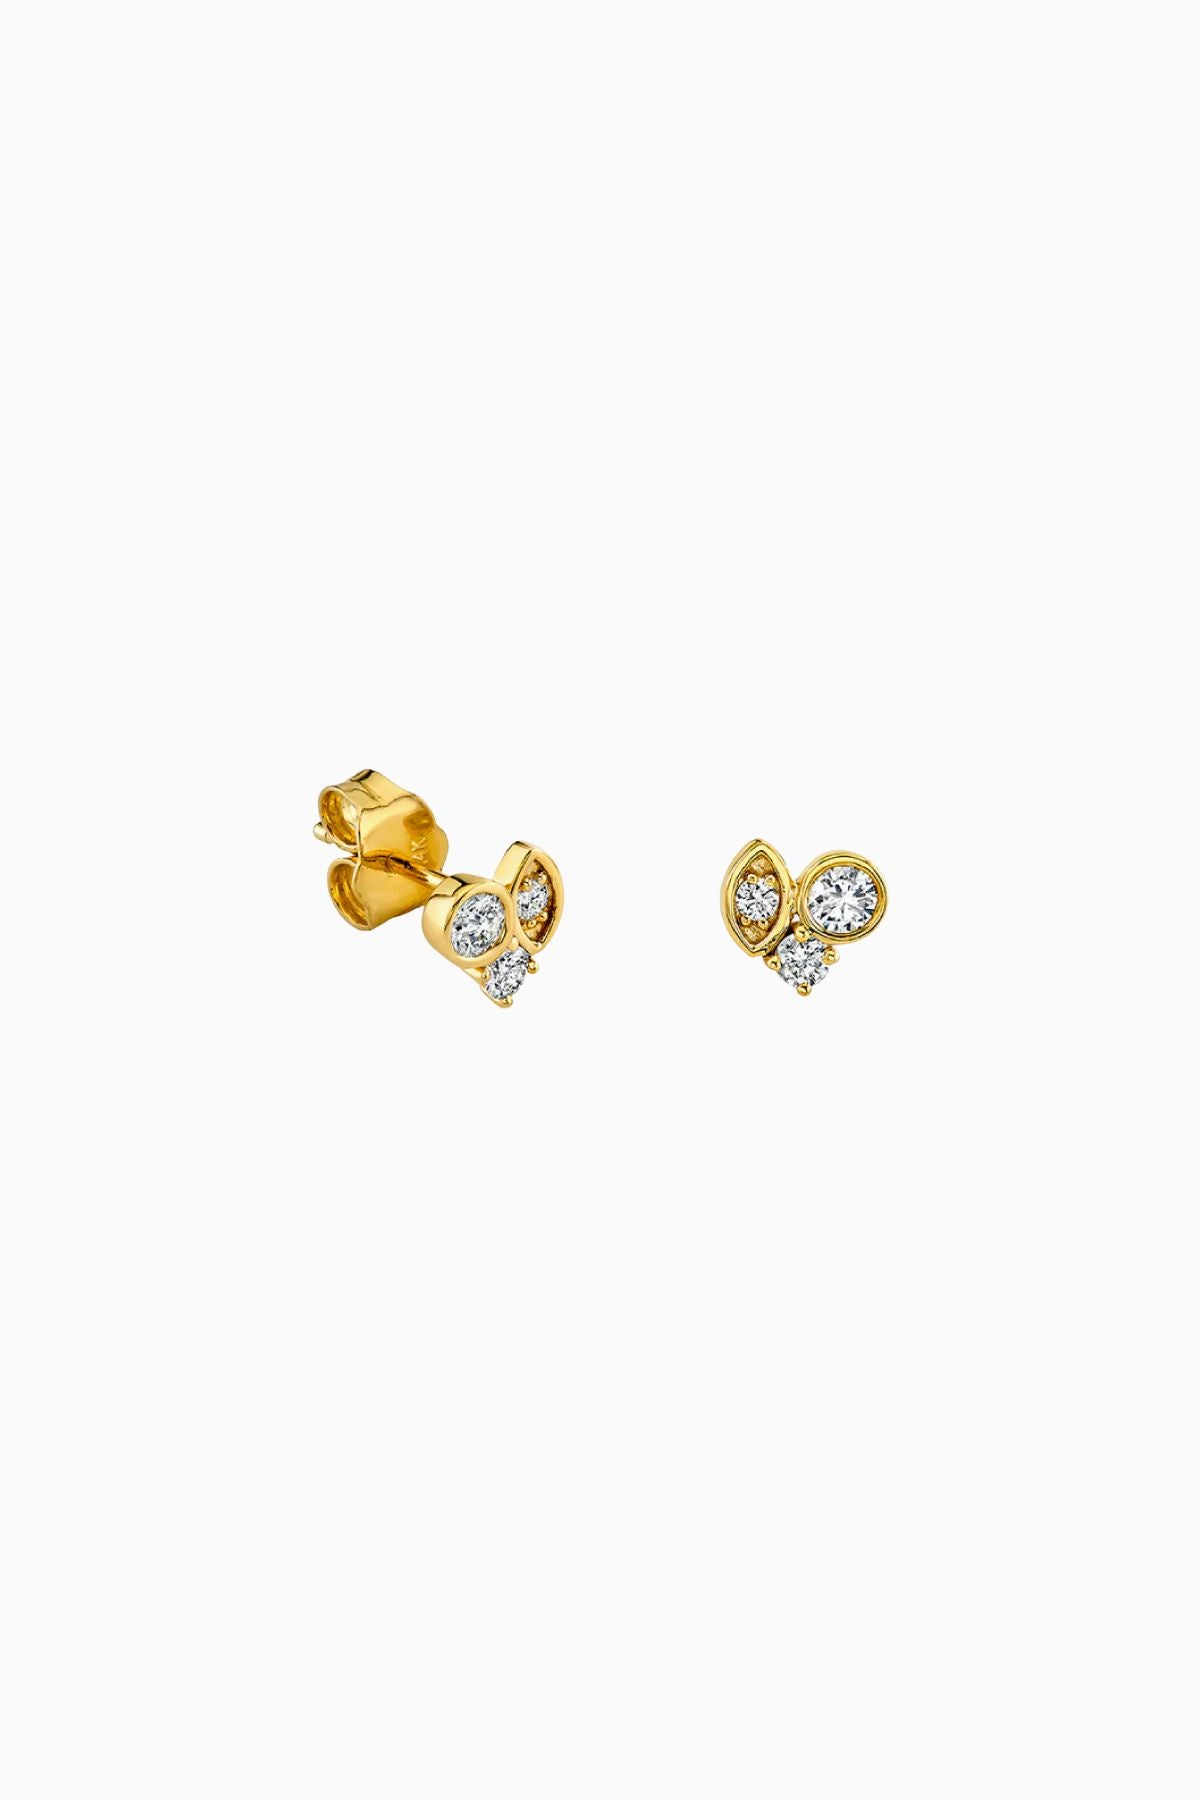 Sydney Evan Marquis Eye Cluster Stud Earrings - Yellow Gold